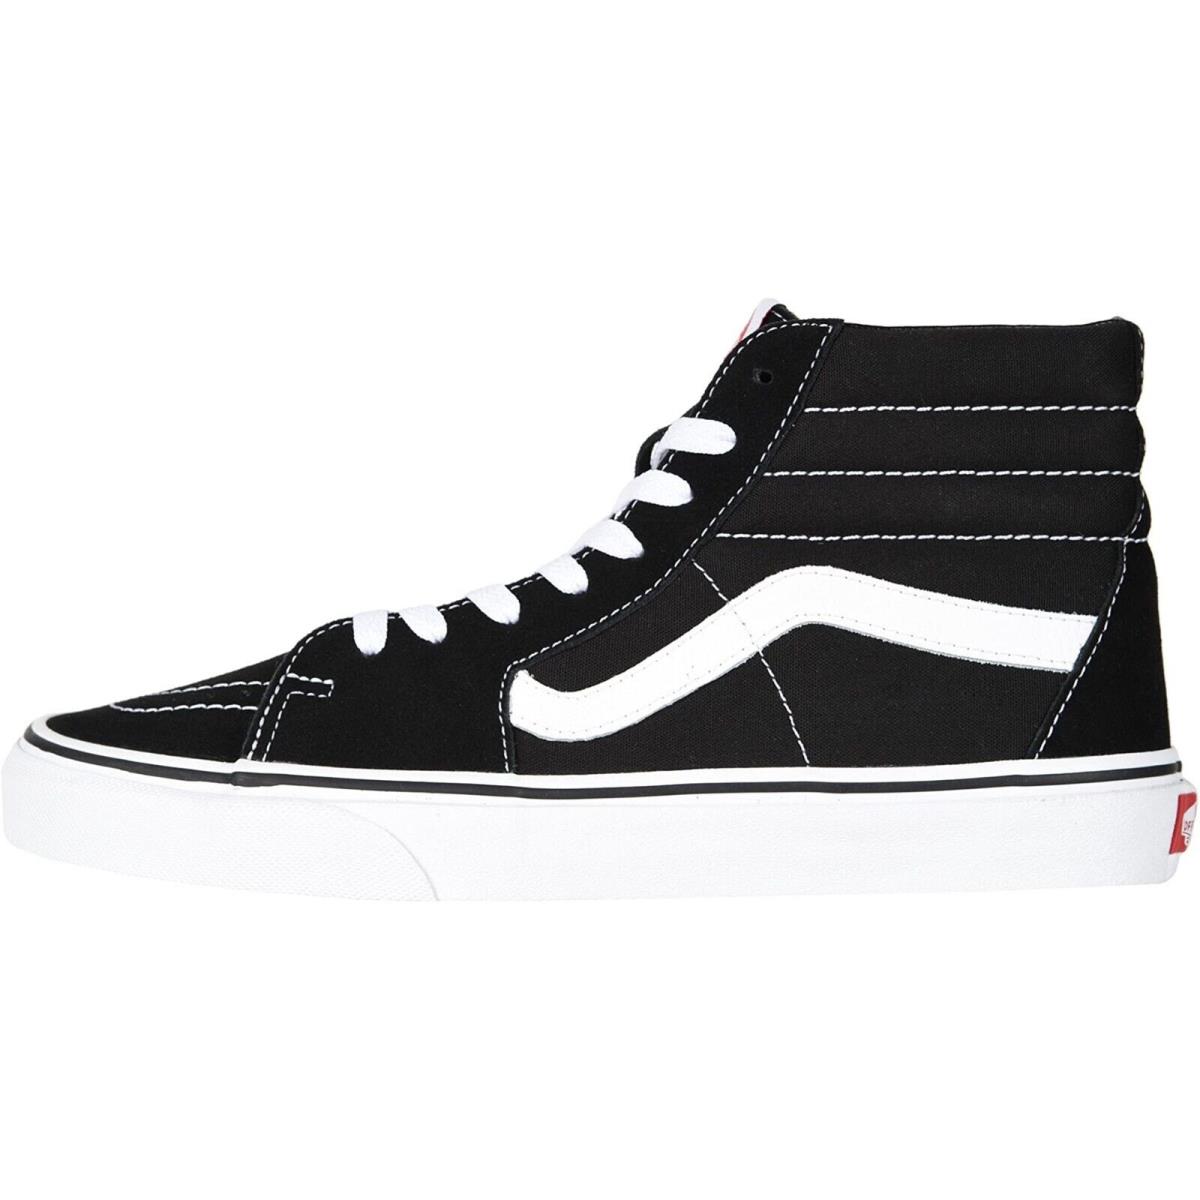 Vans SK8-HI Unisex Canvas Sneakers Mens Womens High Top Skate Shoes Black/White